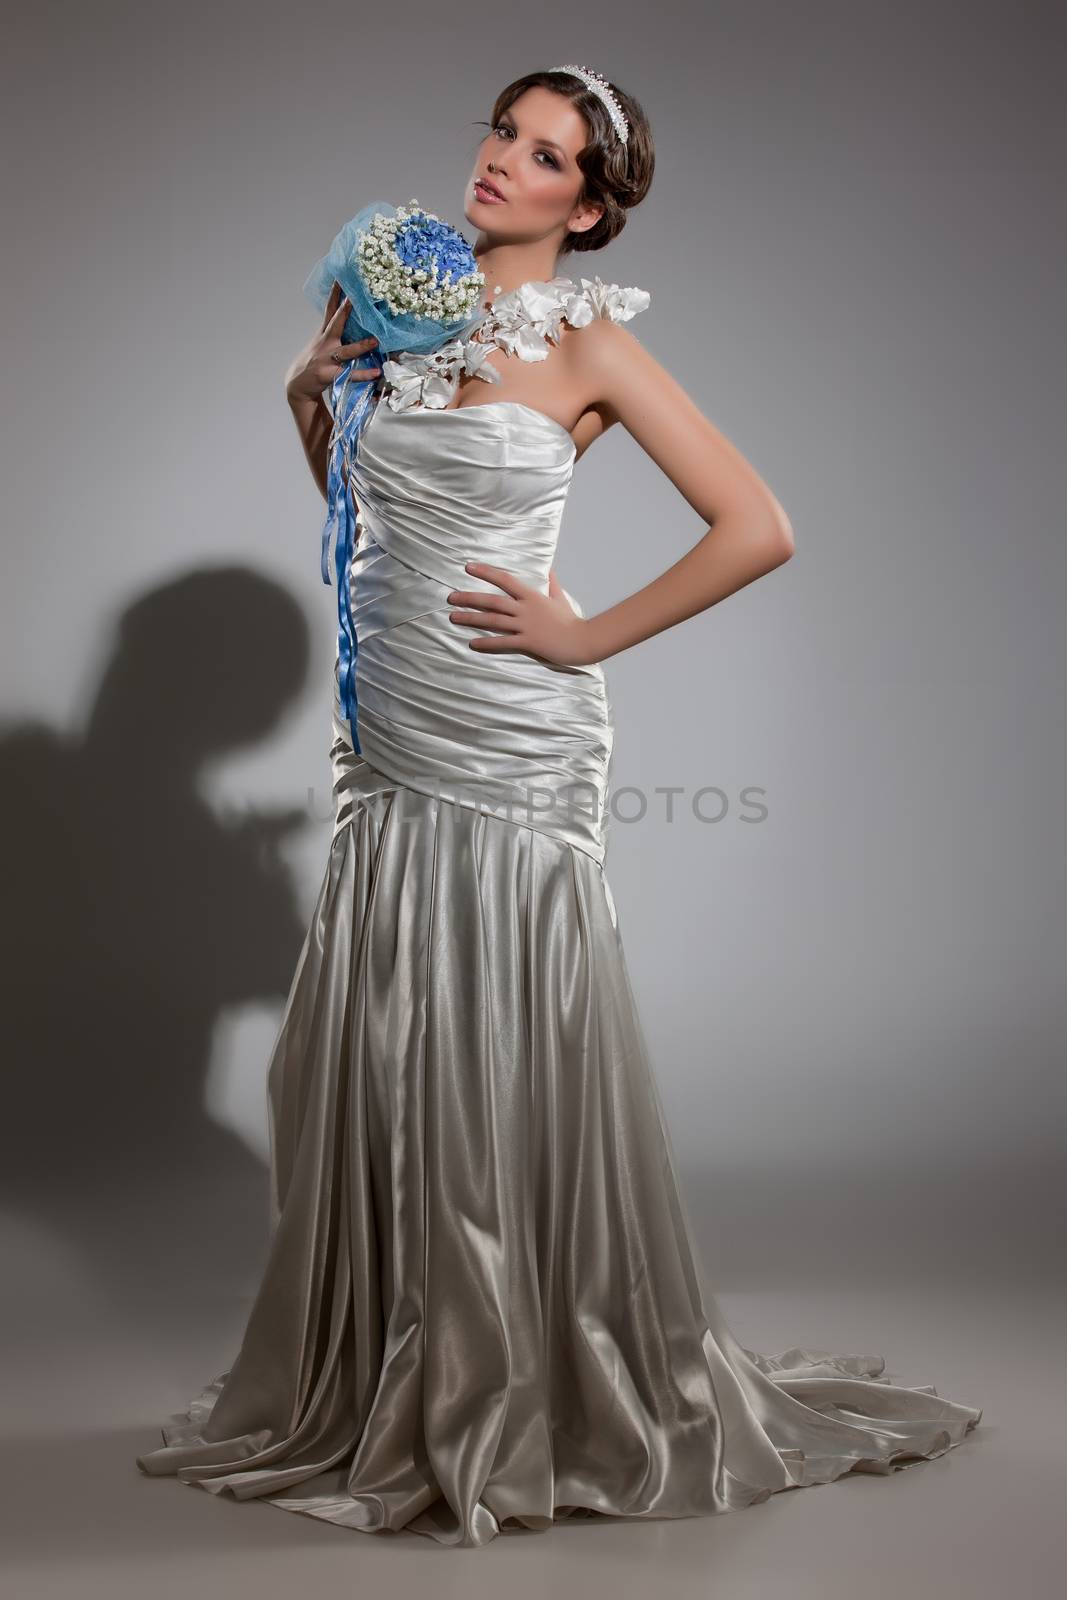 Young beautiful woman in a wedding dress